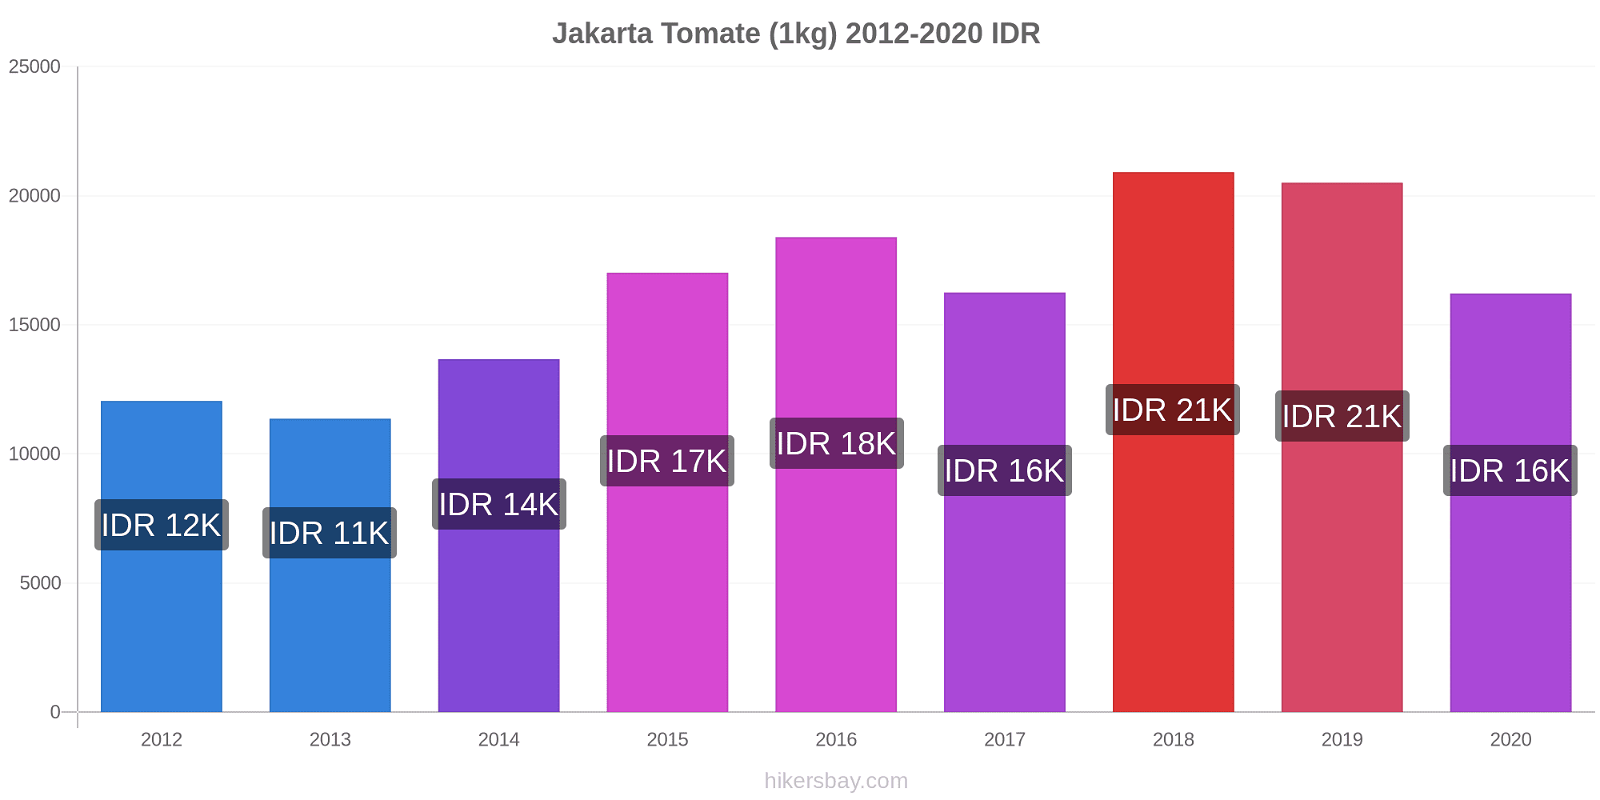 Jakarta Preisänderungen Tomaten (1kg) hikersbay.com